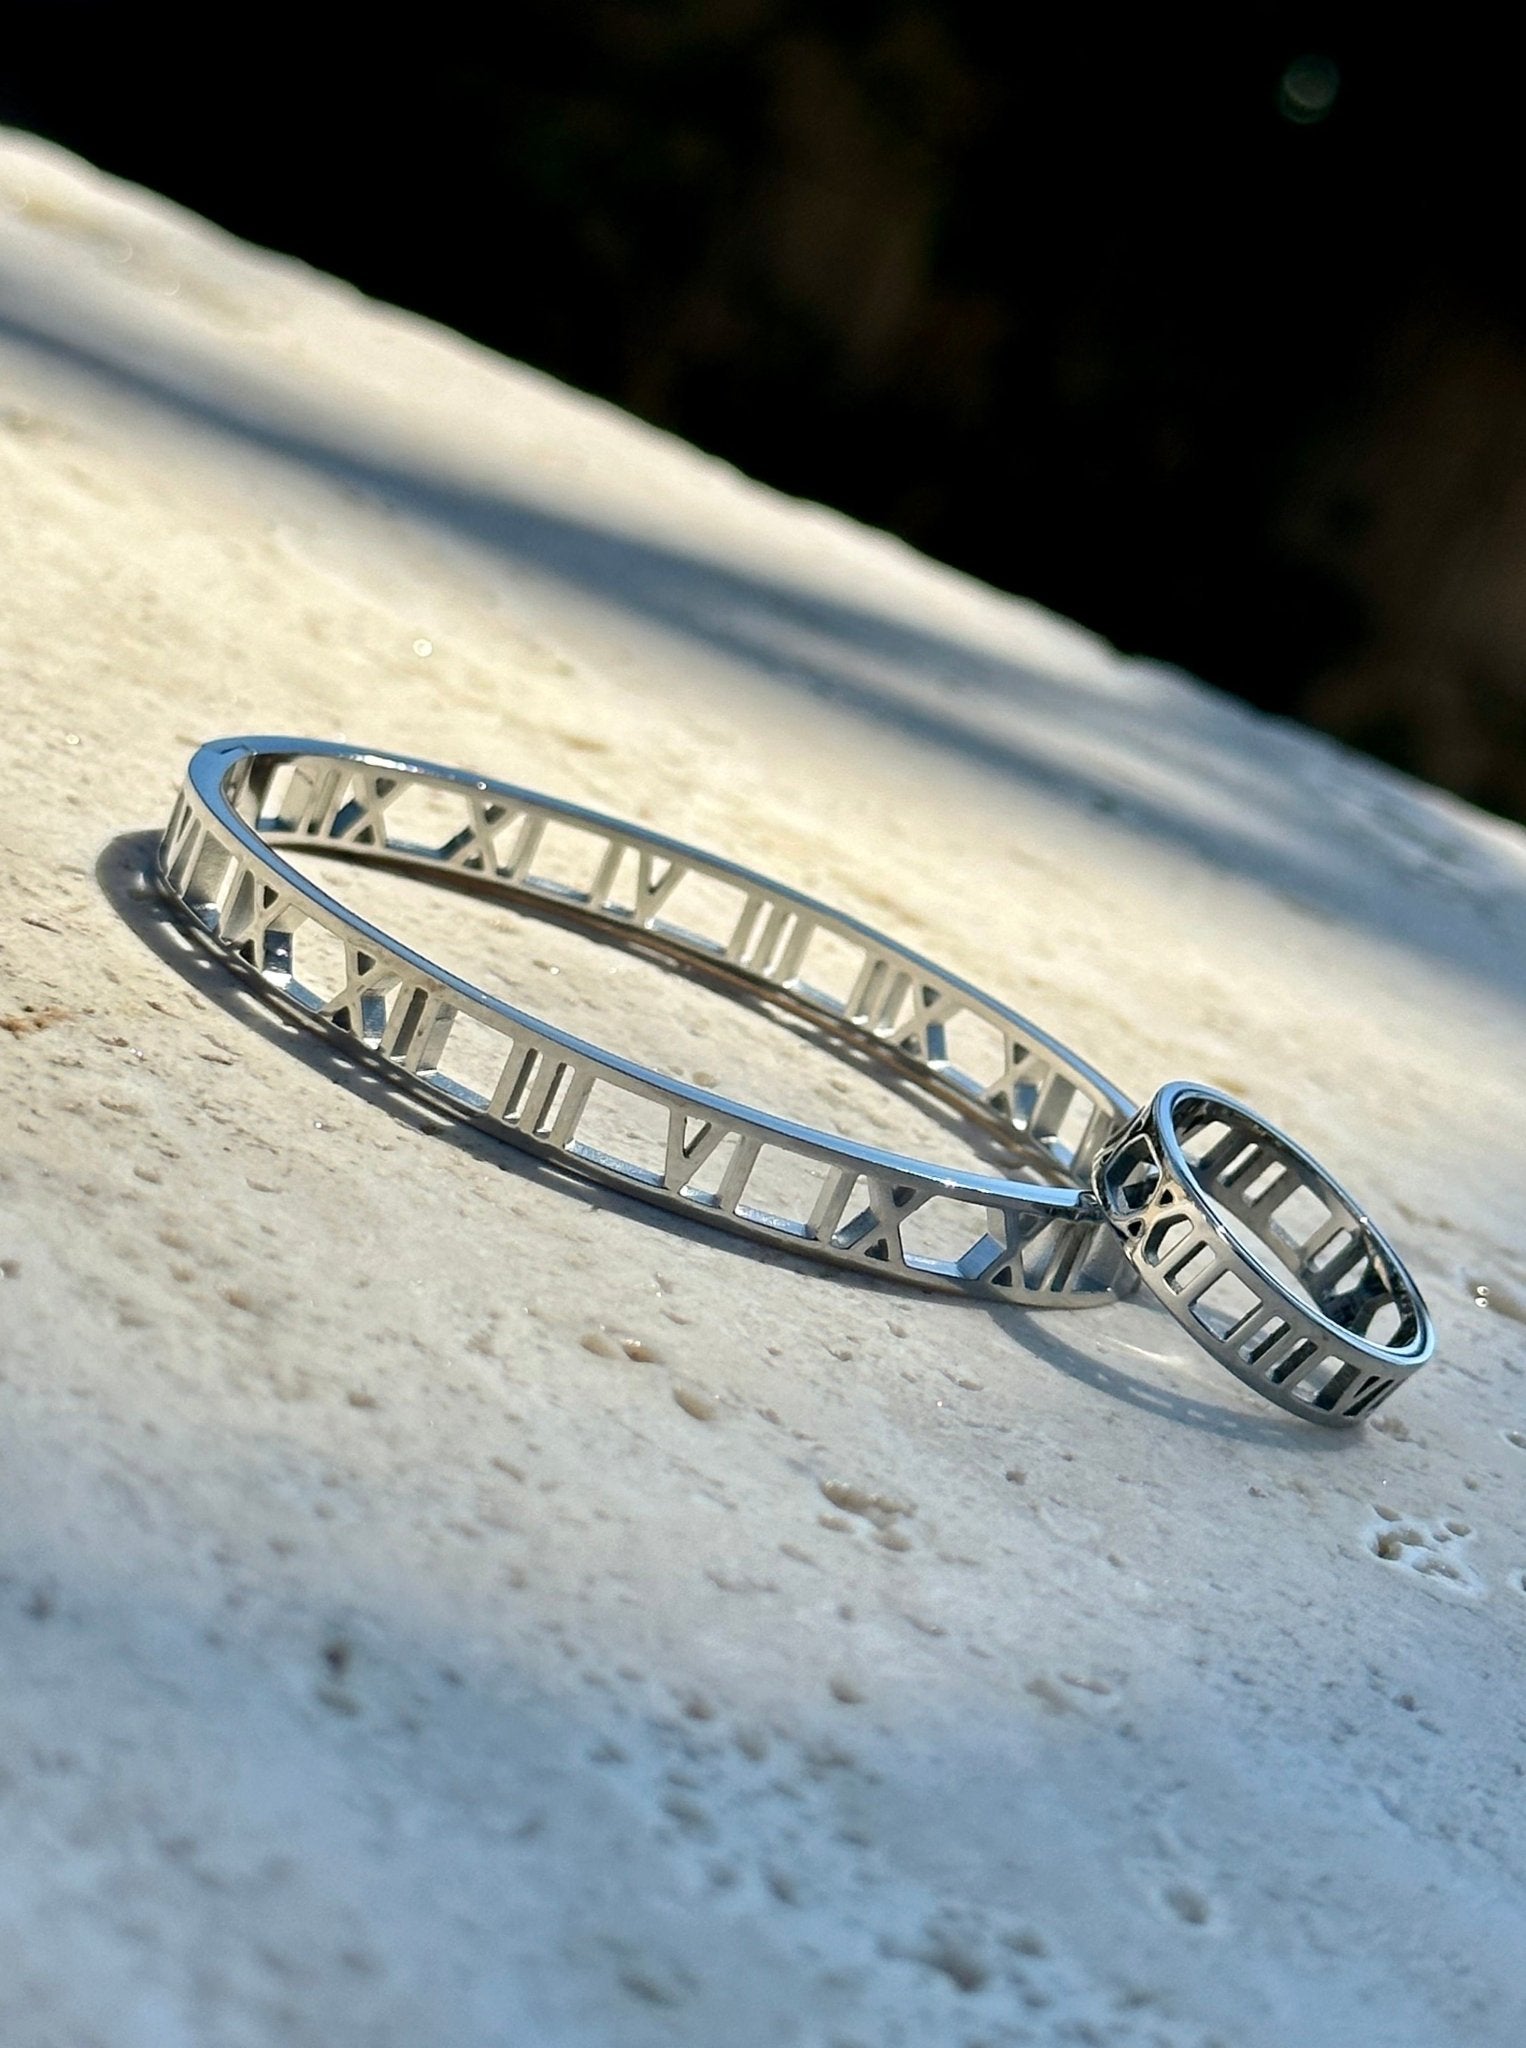 Roman Numeral Bracelet + Ring Set